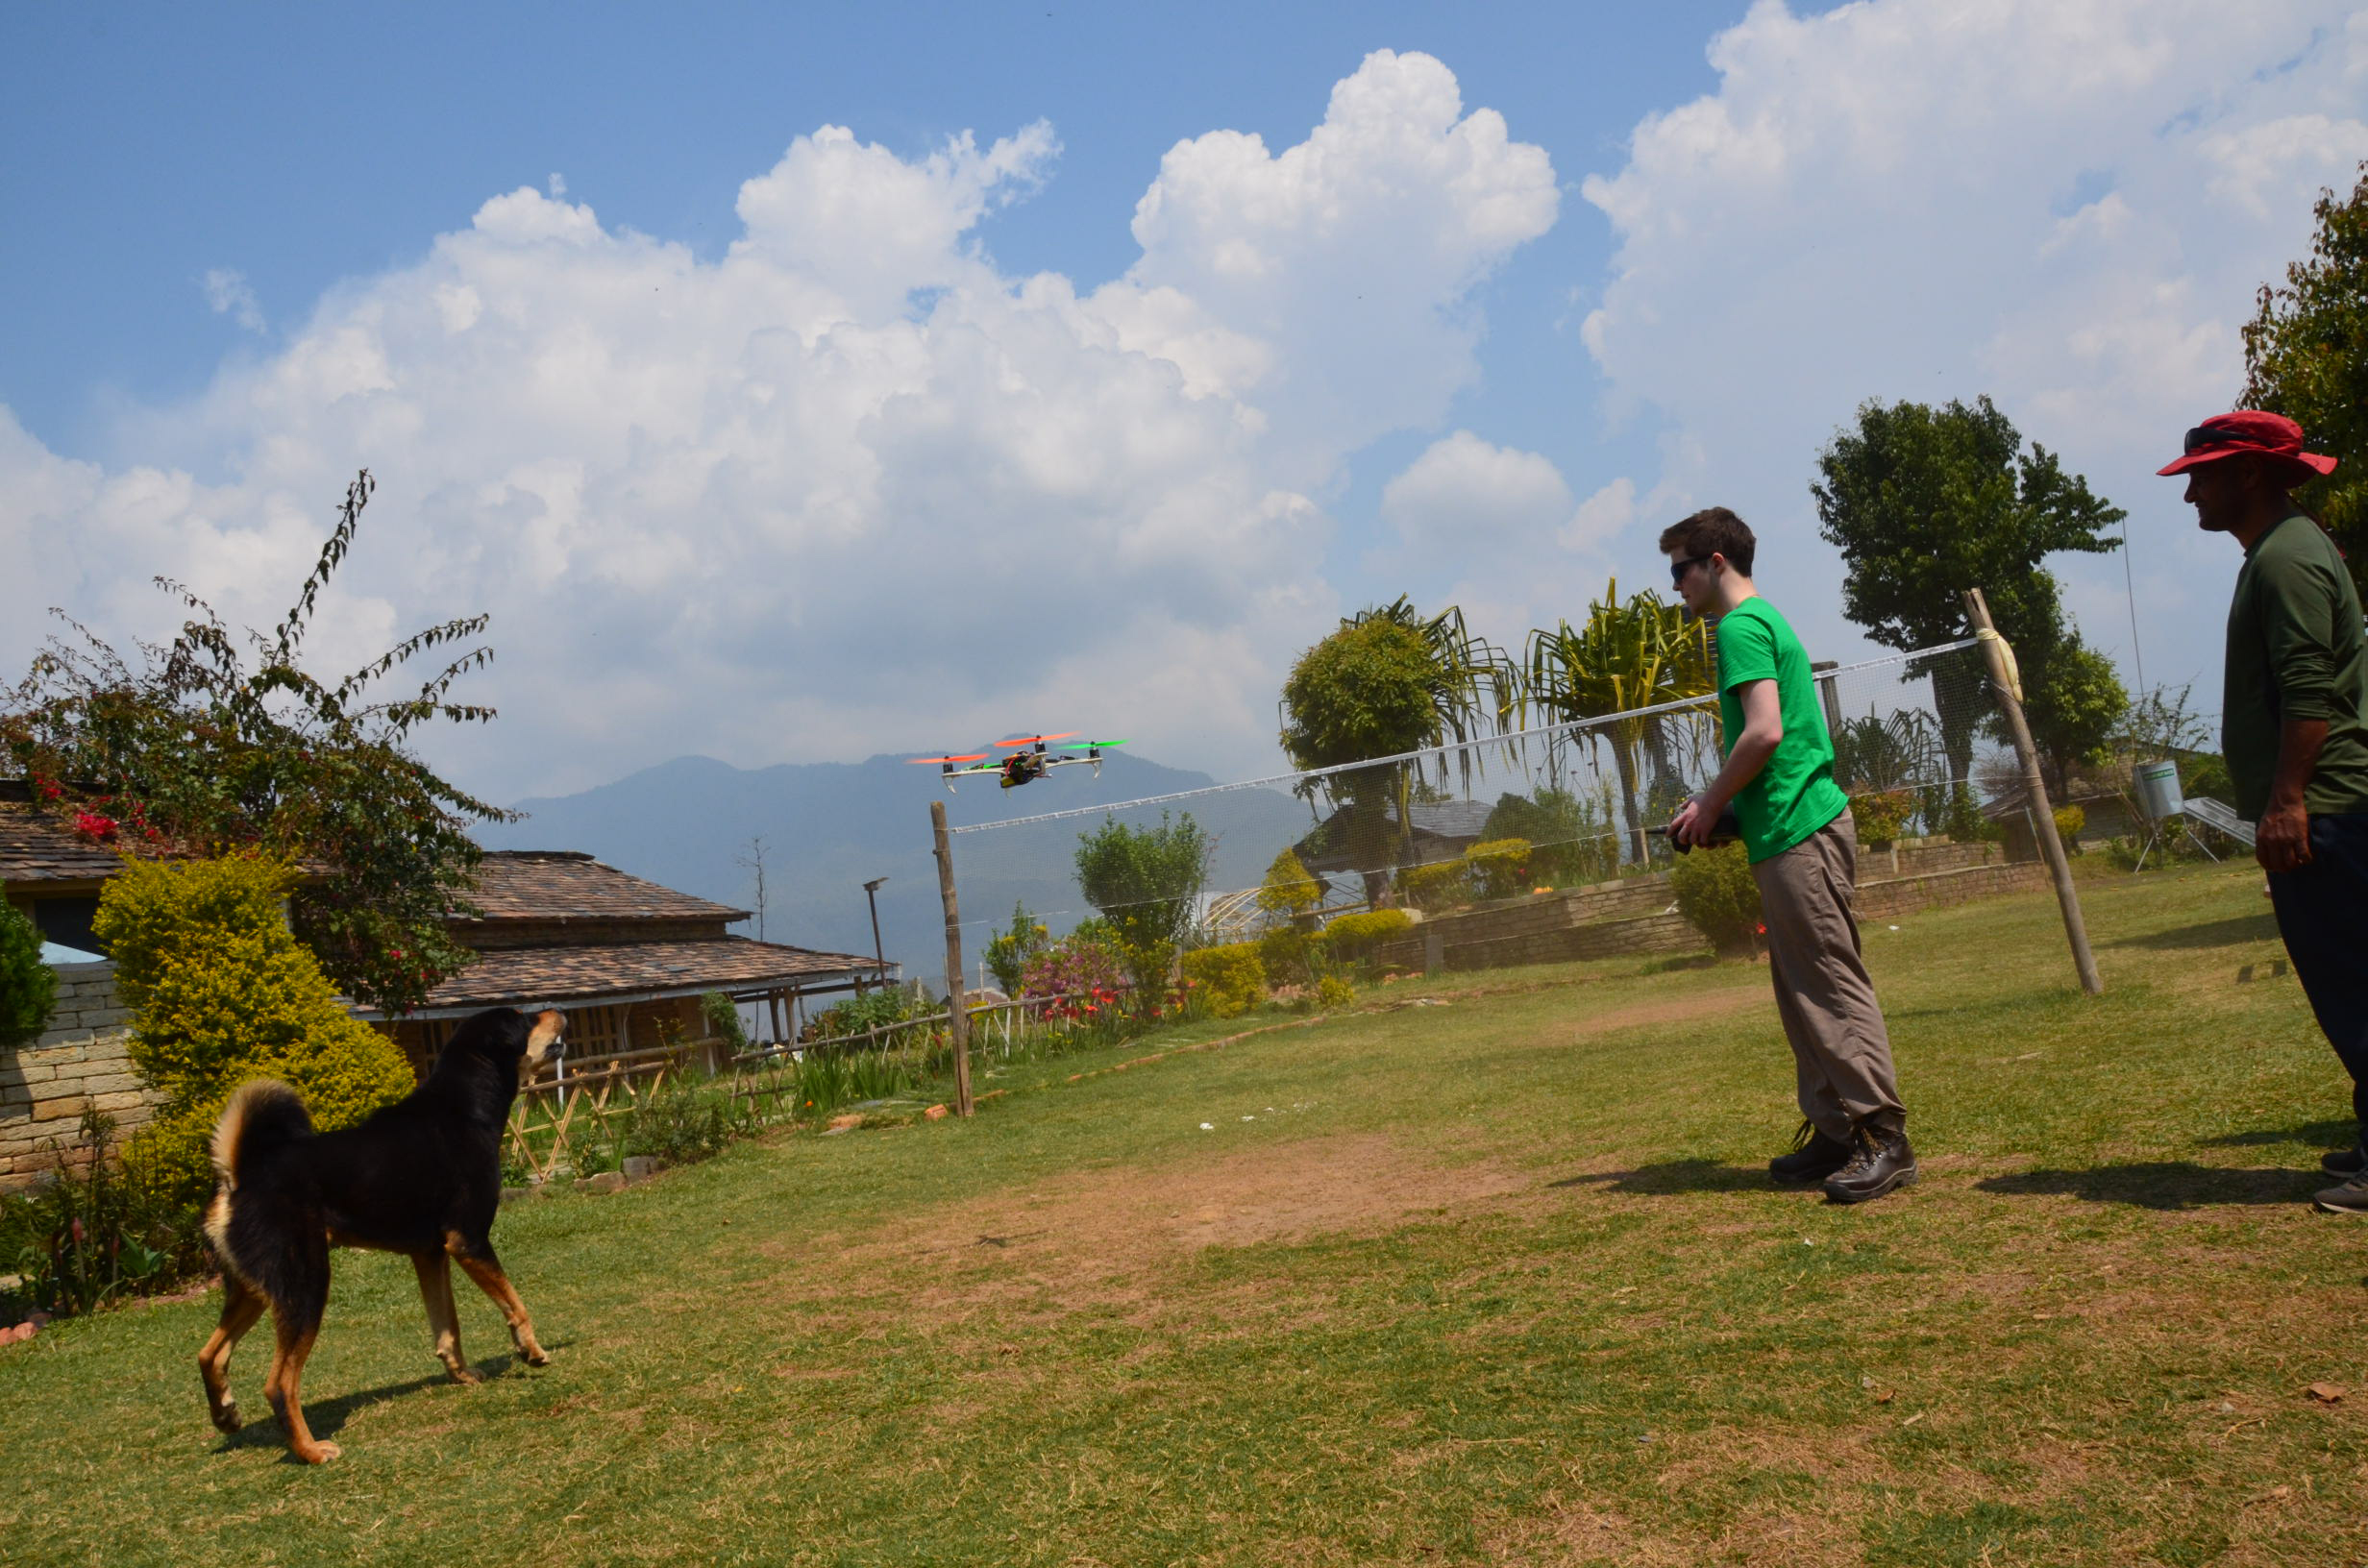 mck-3-23-15-mck-drone-flight-dog-pokhara-region-DSC_1700.jpg